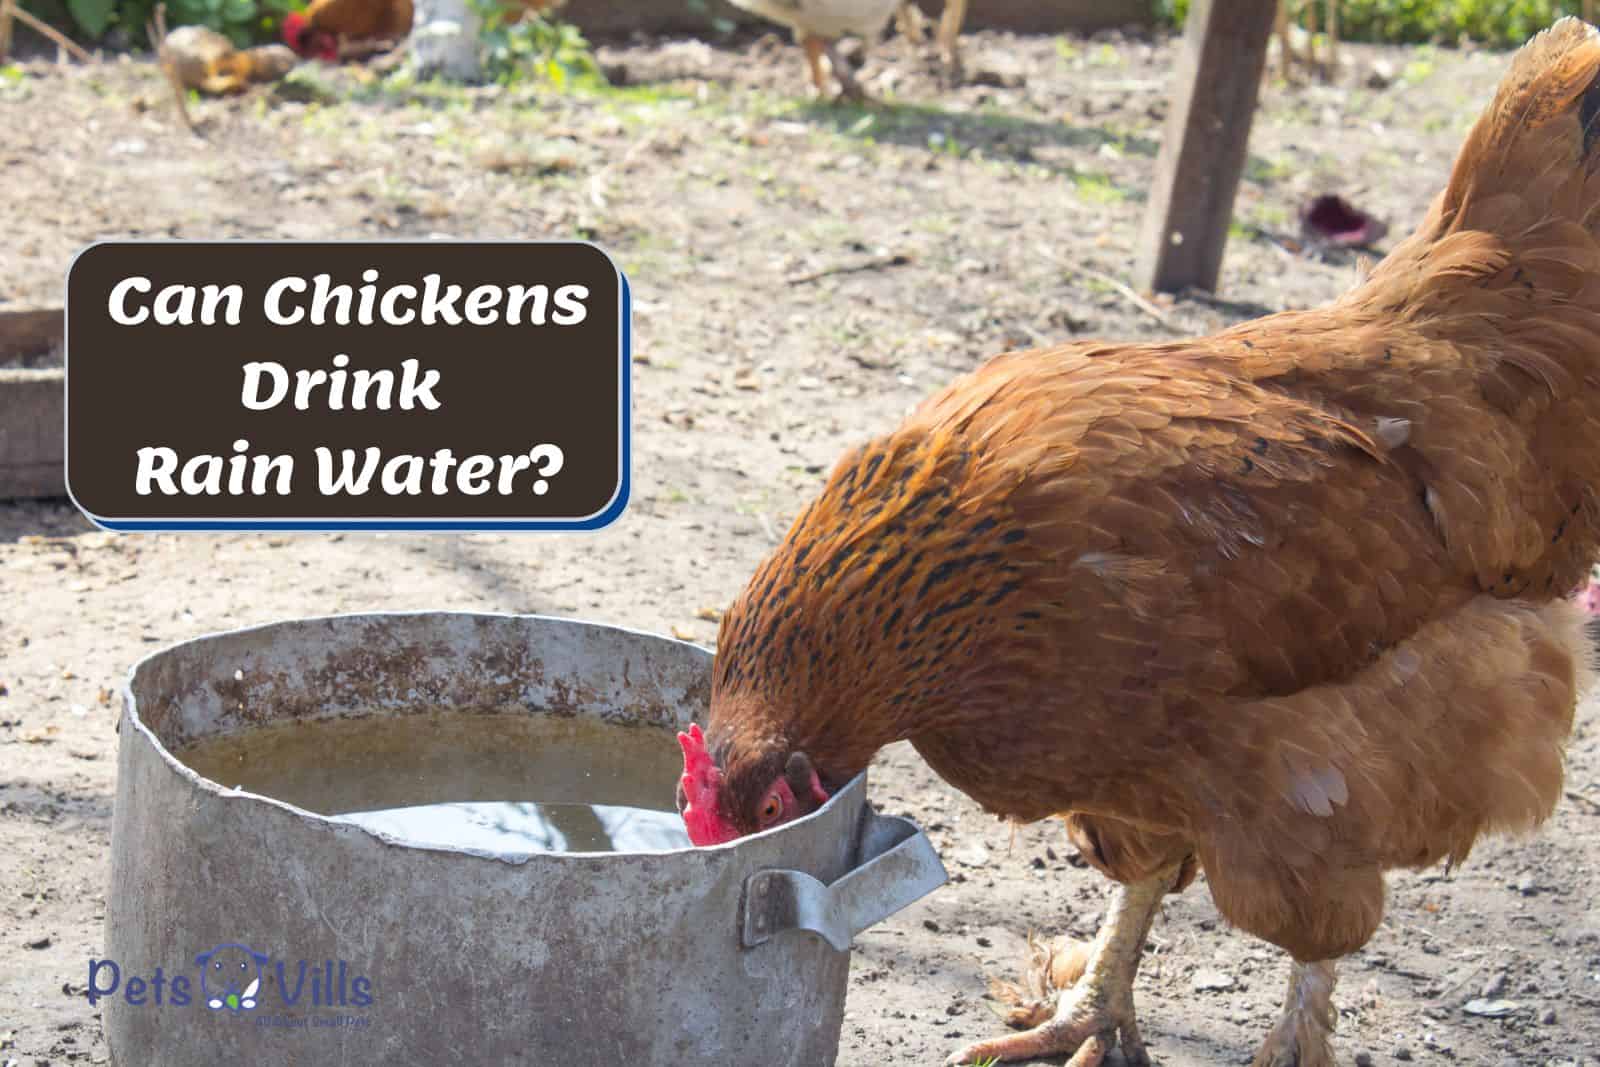 hen drinking rain water but Can Chickens Drink Rain Water?